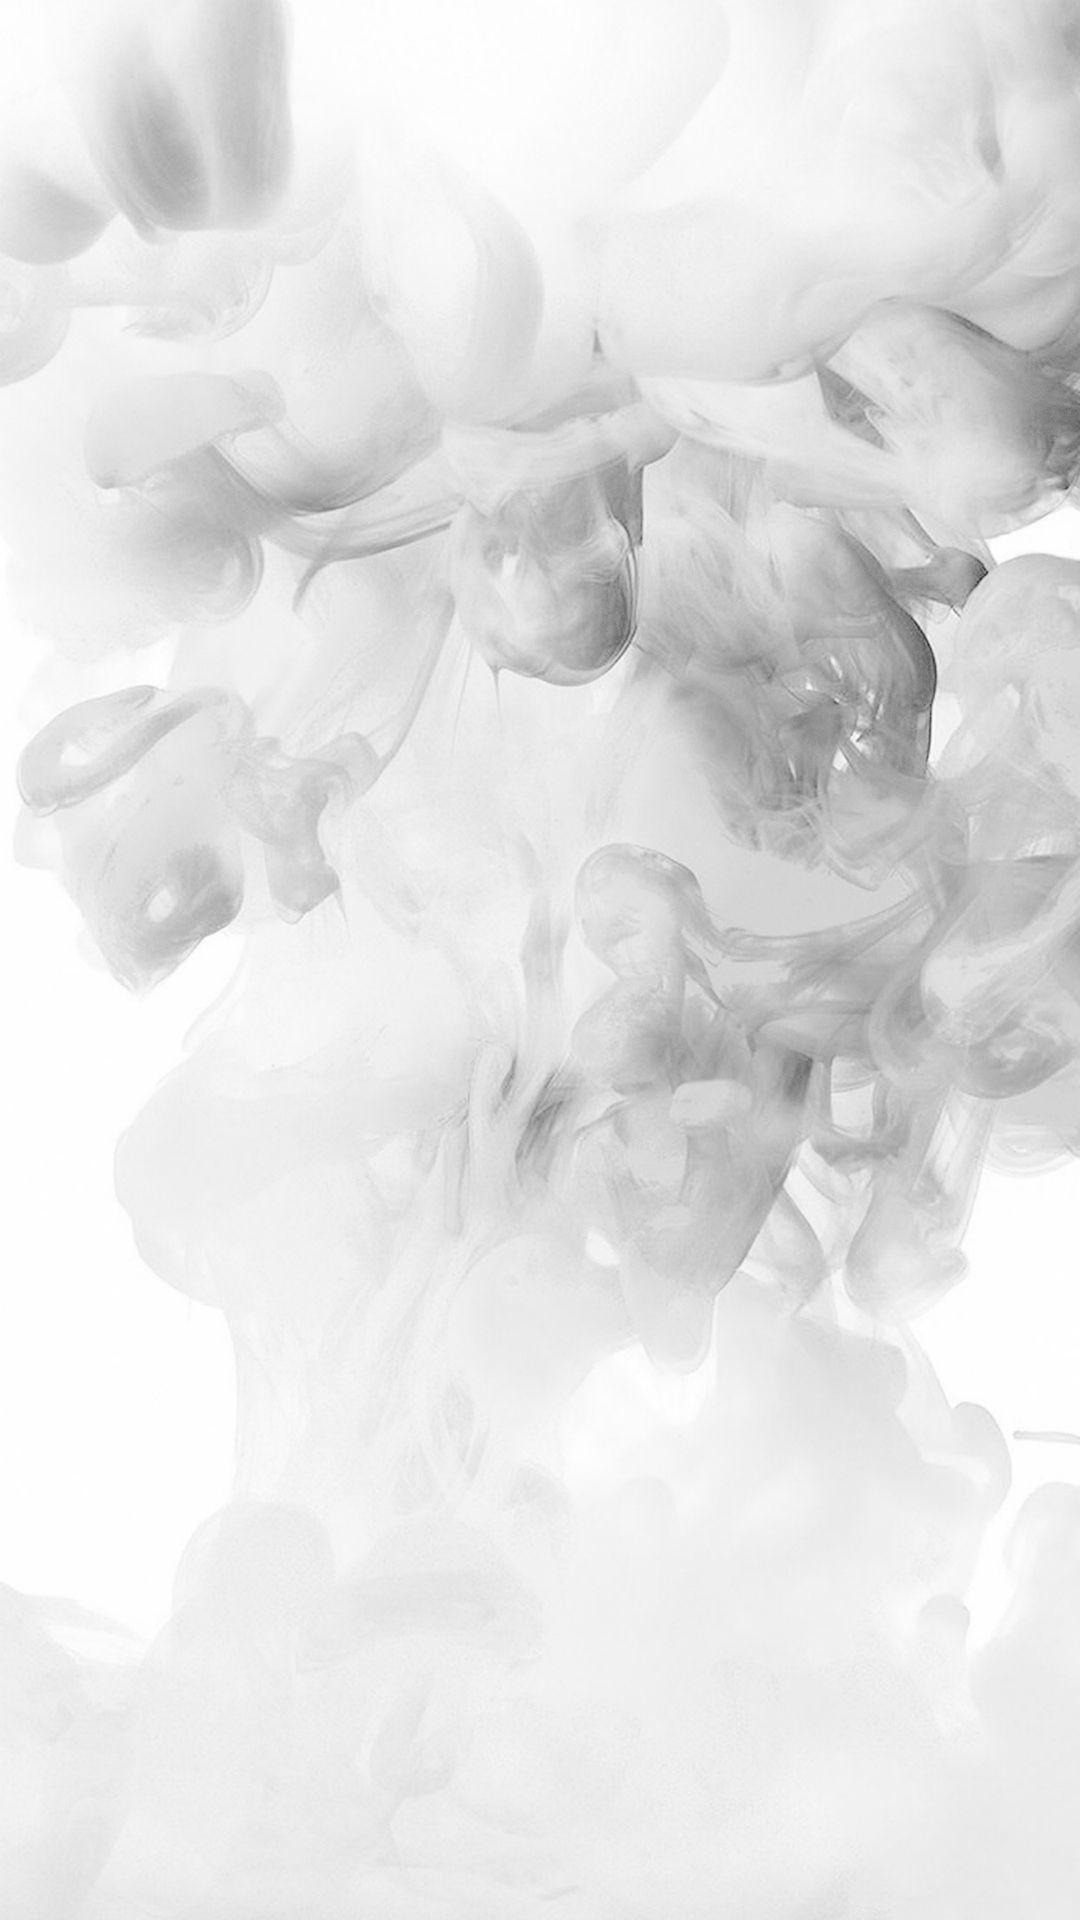 Smoke White Abstract Fog Art Illust iPhone 6 wallpaper. fog / iPhone HD Wallpaper Background Download HD Wallpaper (Desktop Background / Android / iPhone) (1080p, 4k) (1080x1920) (2021)